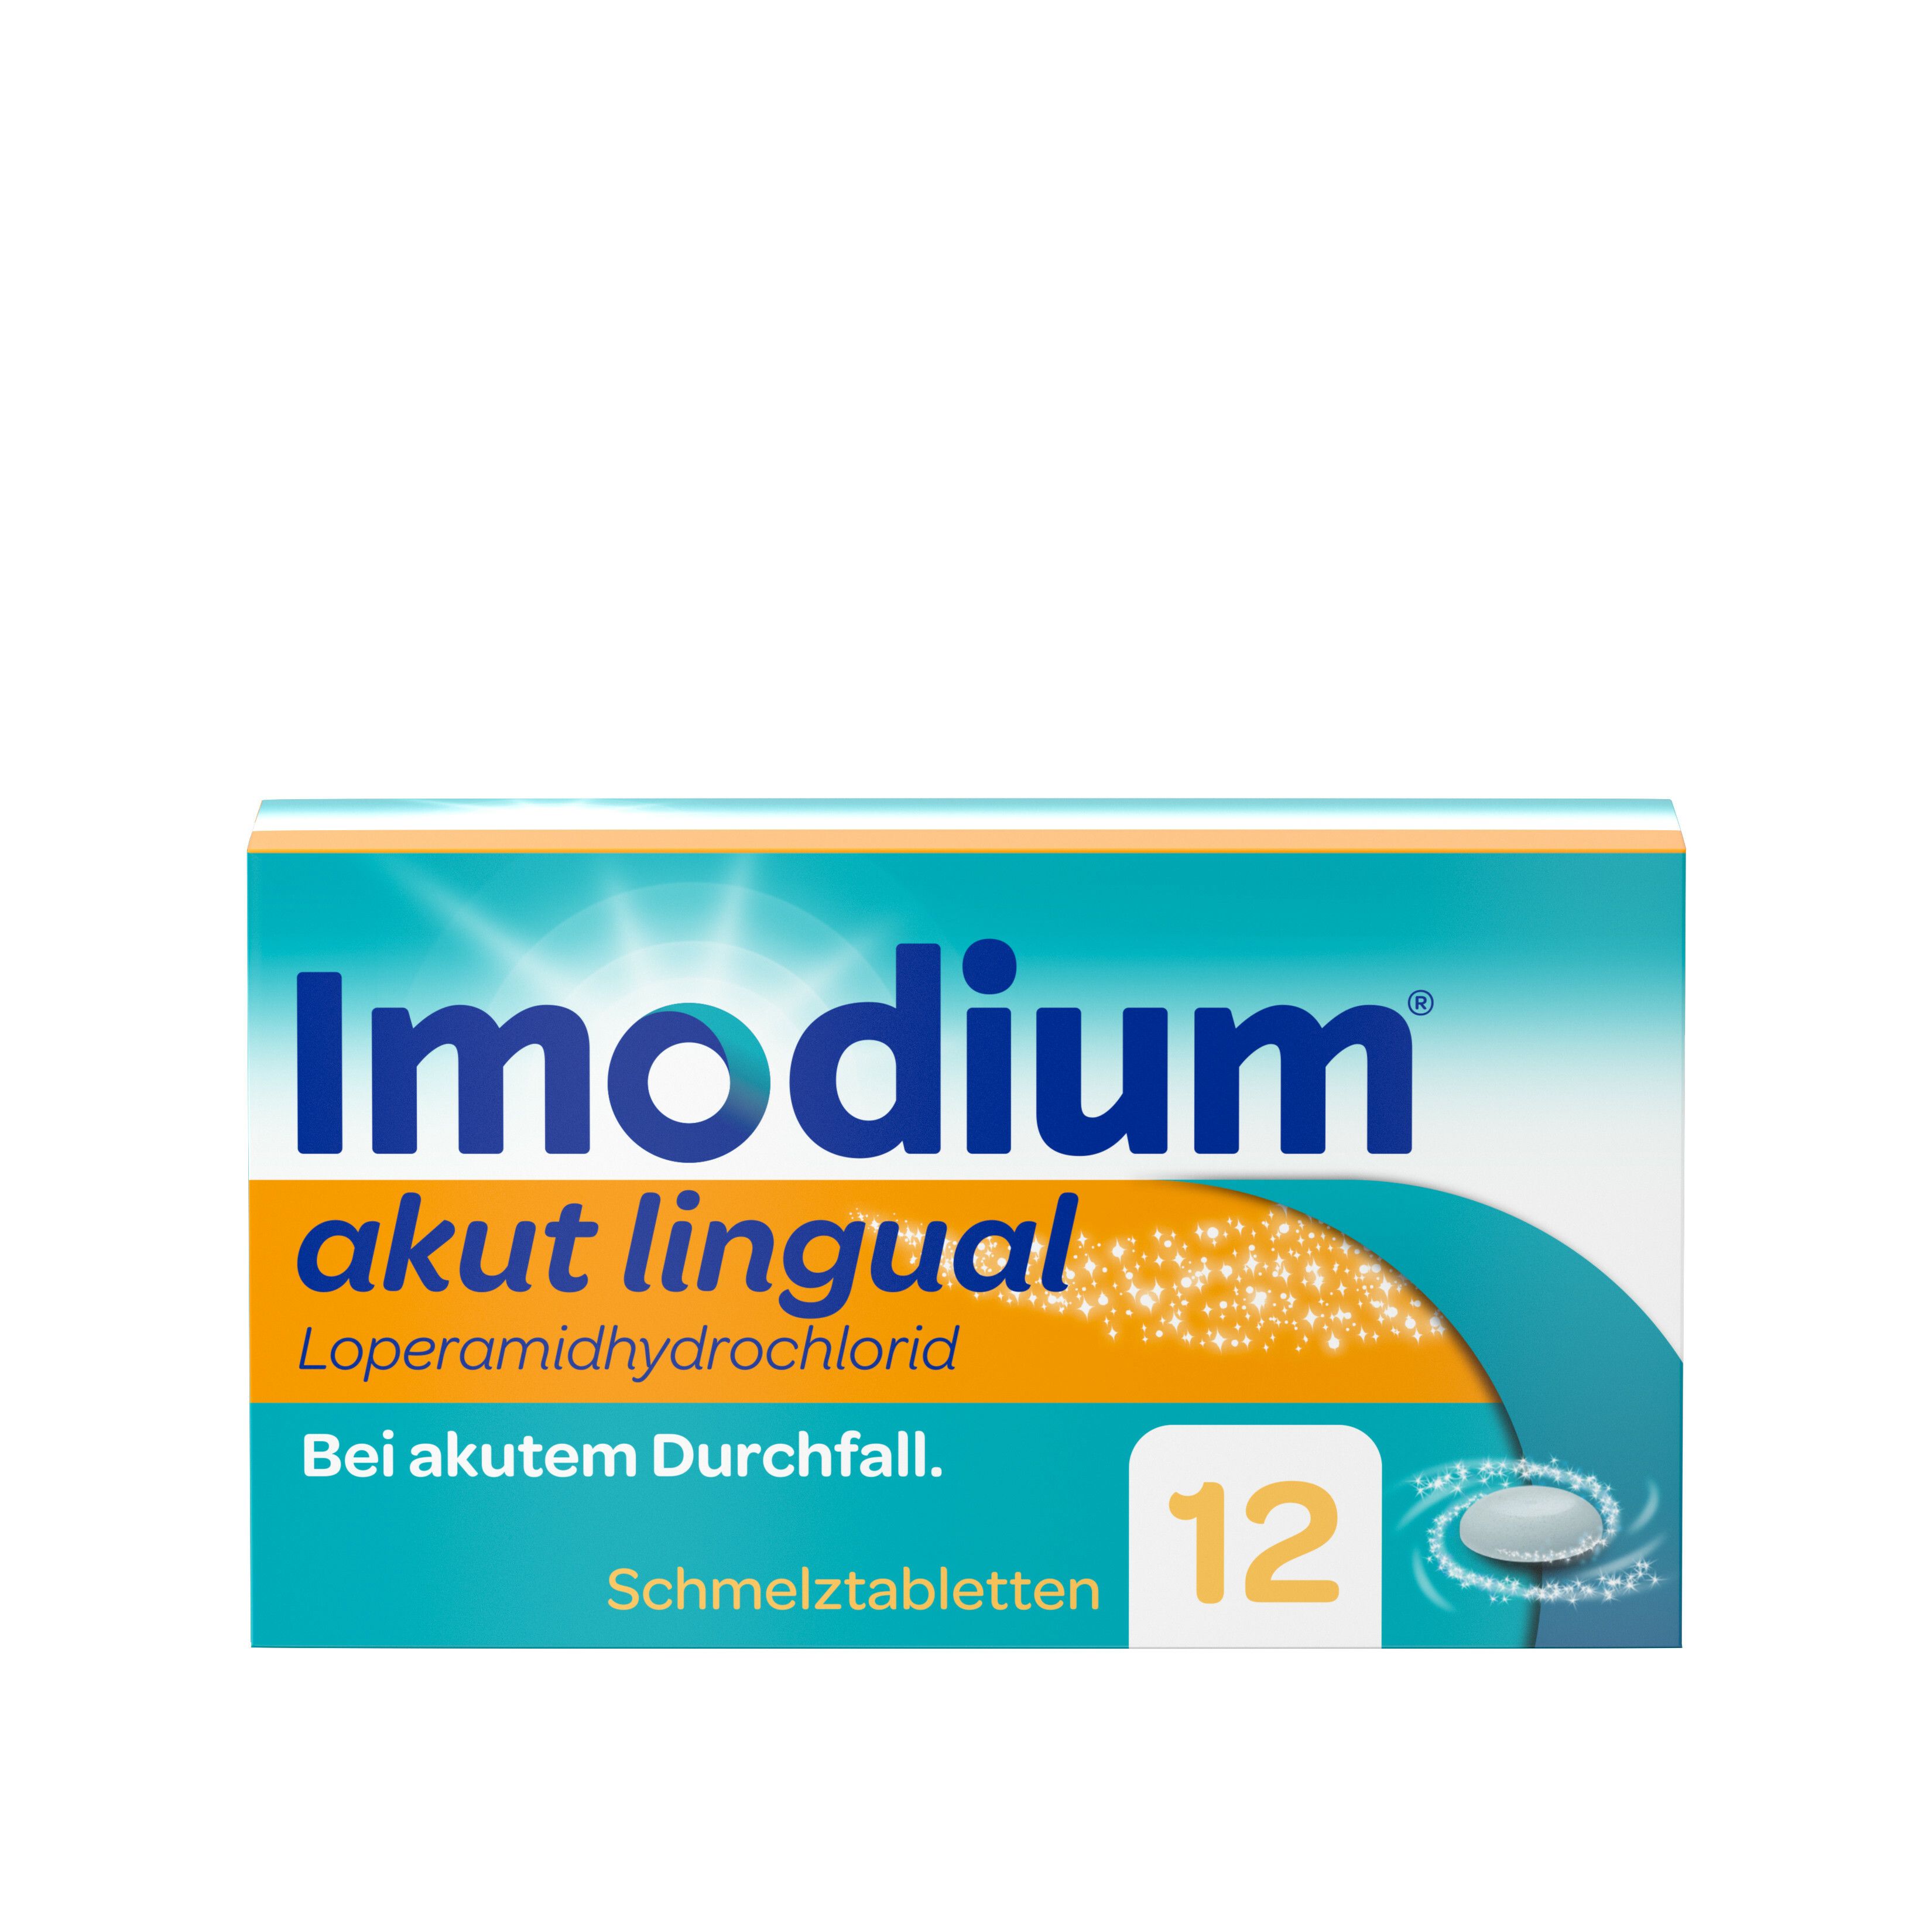 Imodium® akut lingual - bei akutem Durchfall - Jetzt 1€ mit dem Code imodium1 sparen*